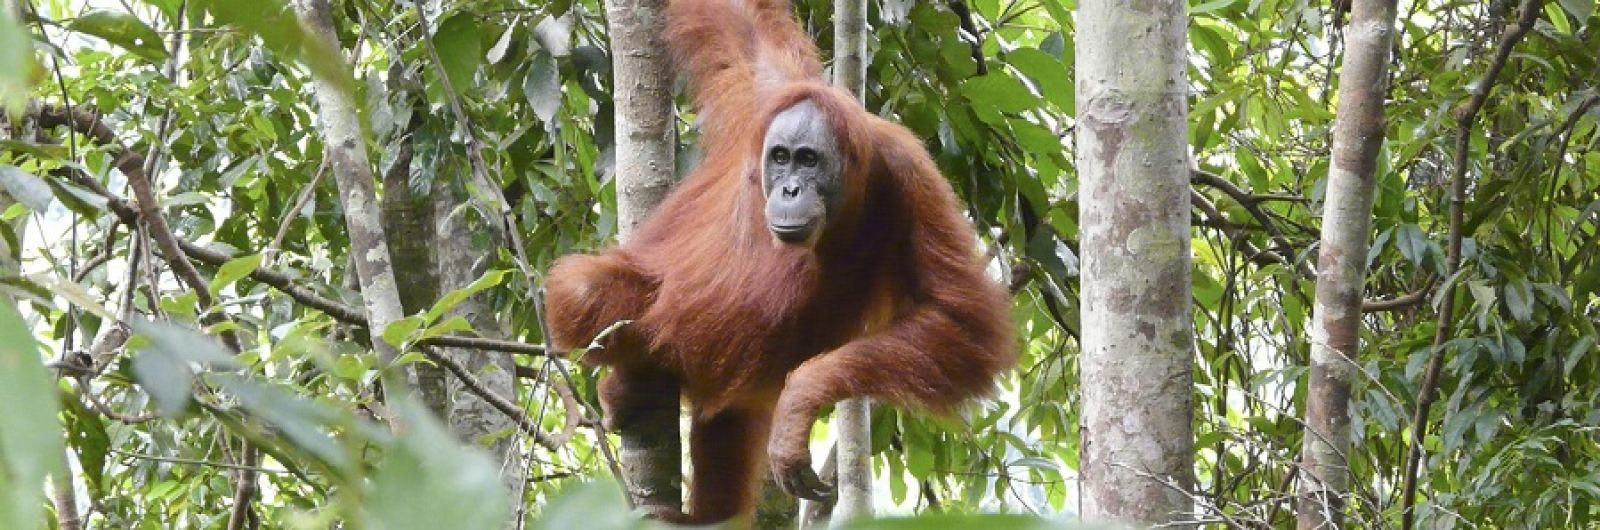 indonesia orangutan 004